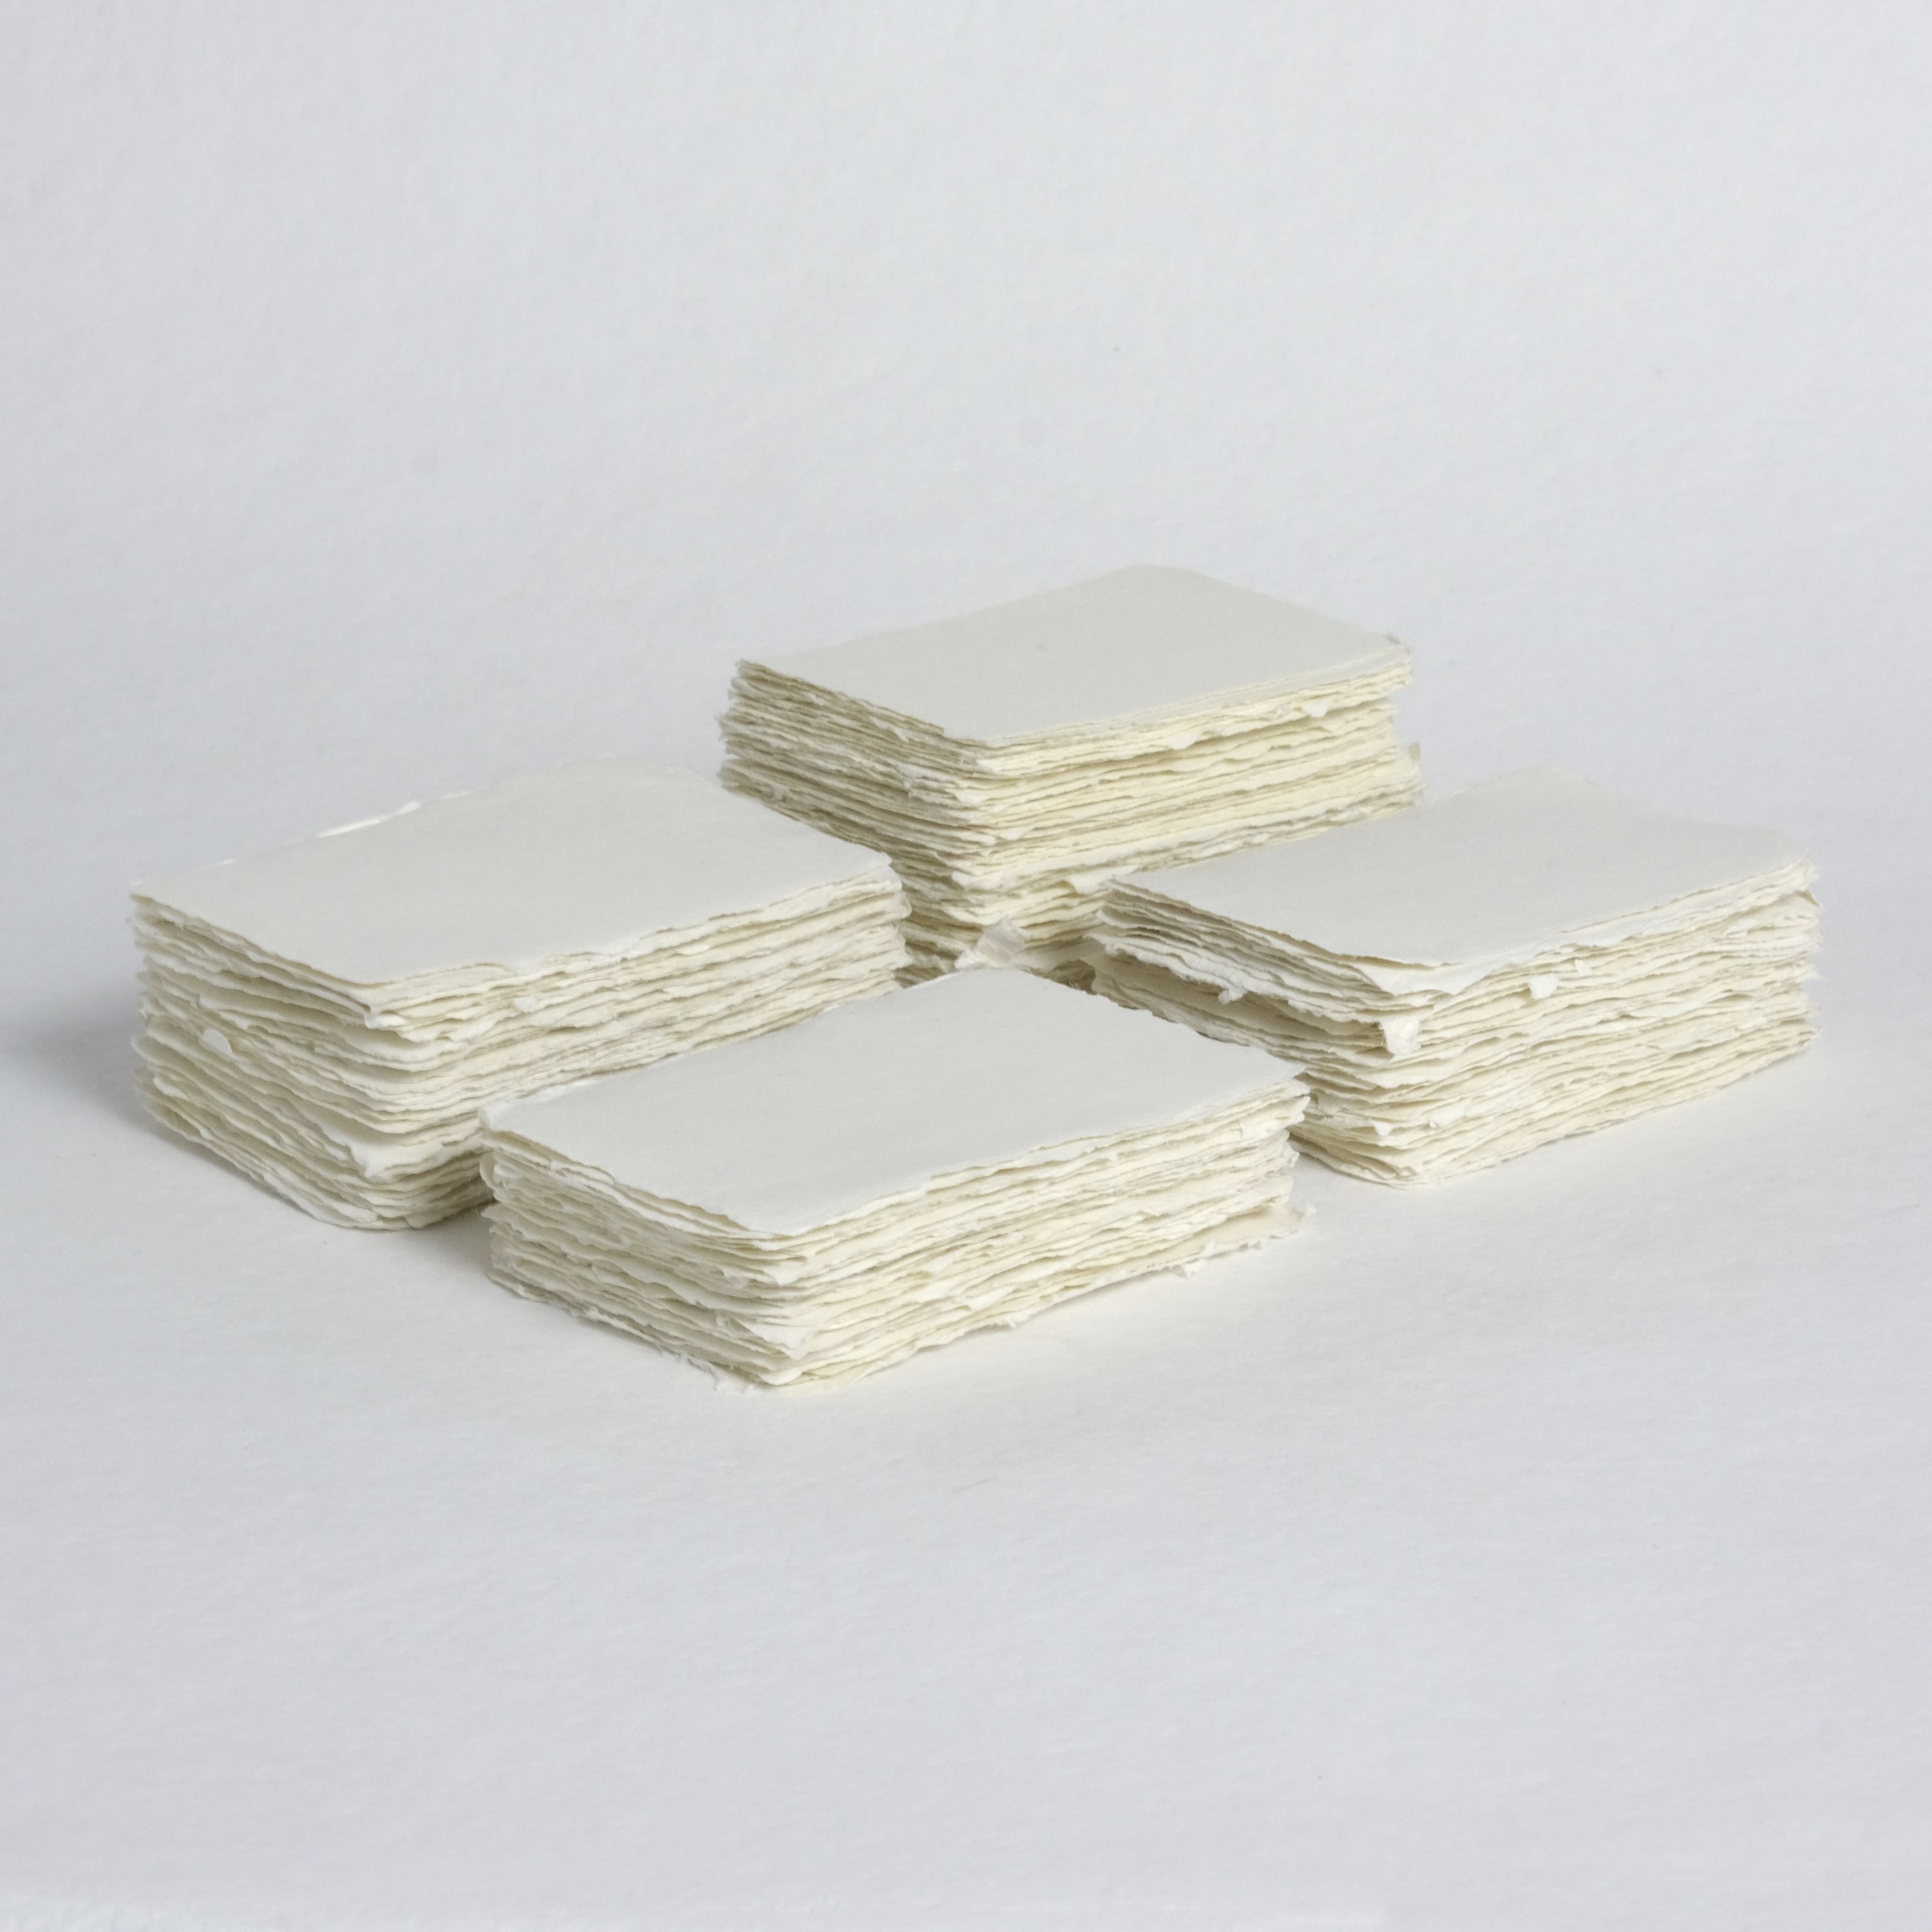 Ivory, 4.3 x 8.7, 200 gsm – Deckle edge paper – Indian Cotton